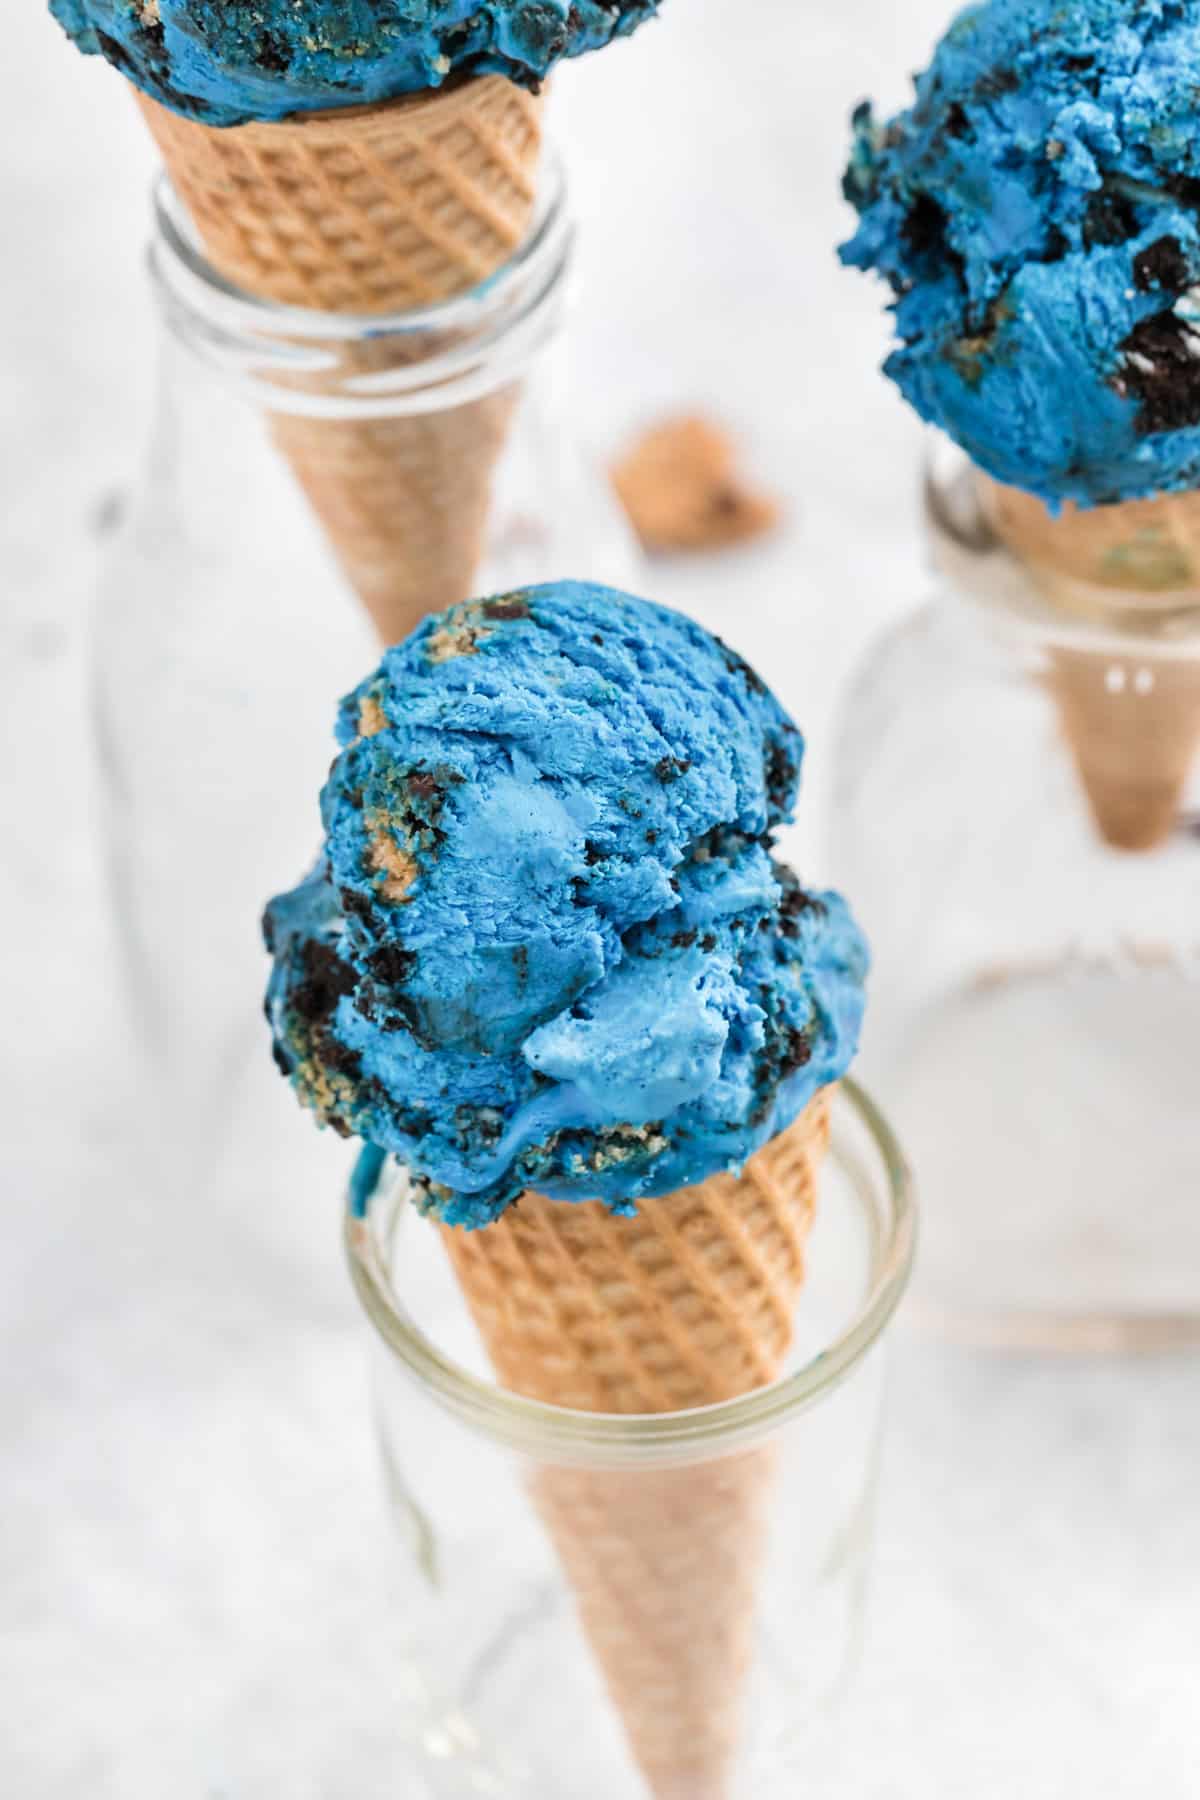 Three jars holding cones of Cookie Monster Ice Cream